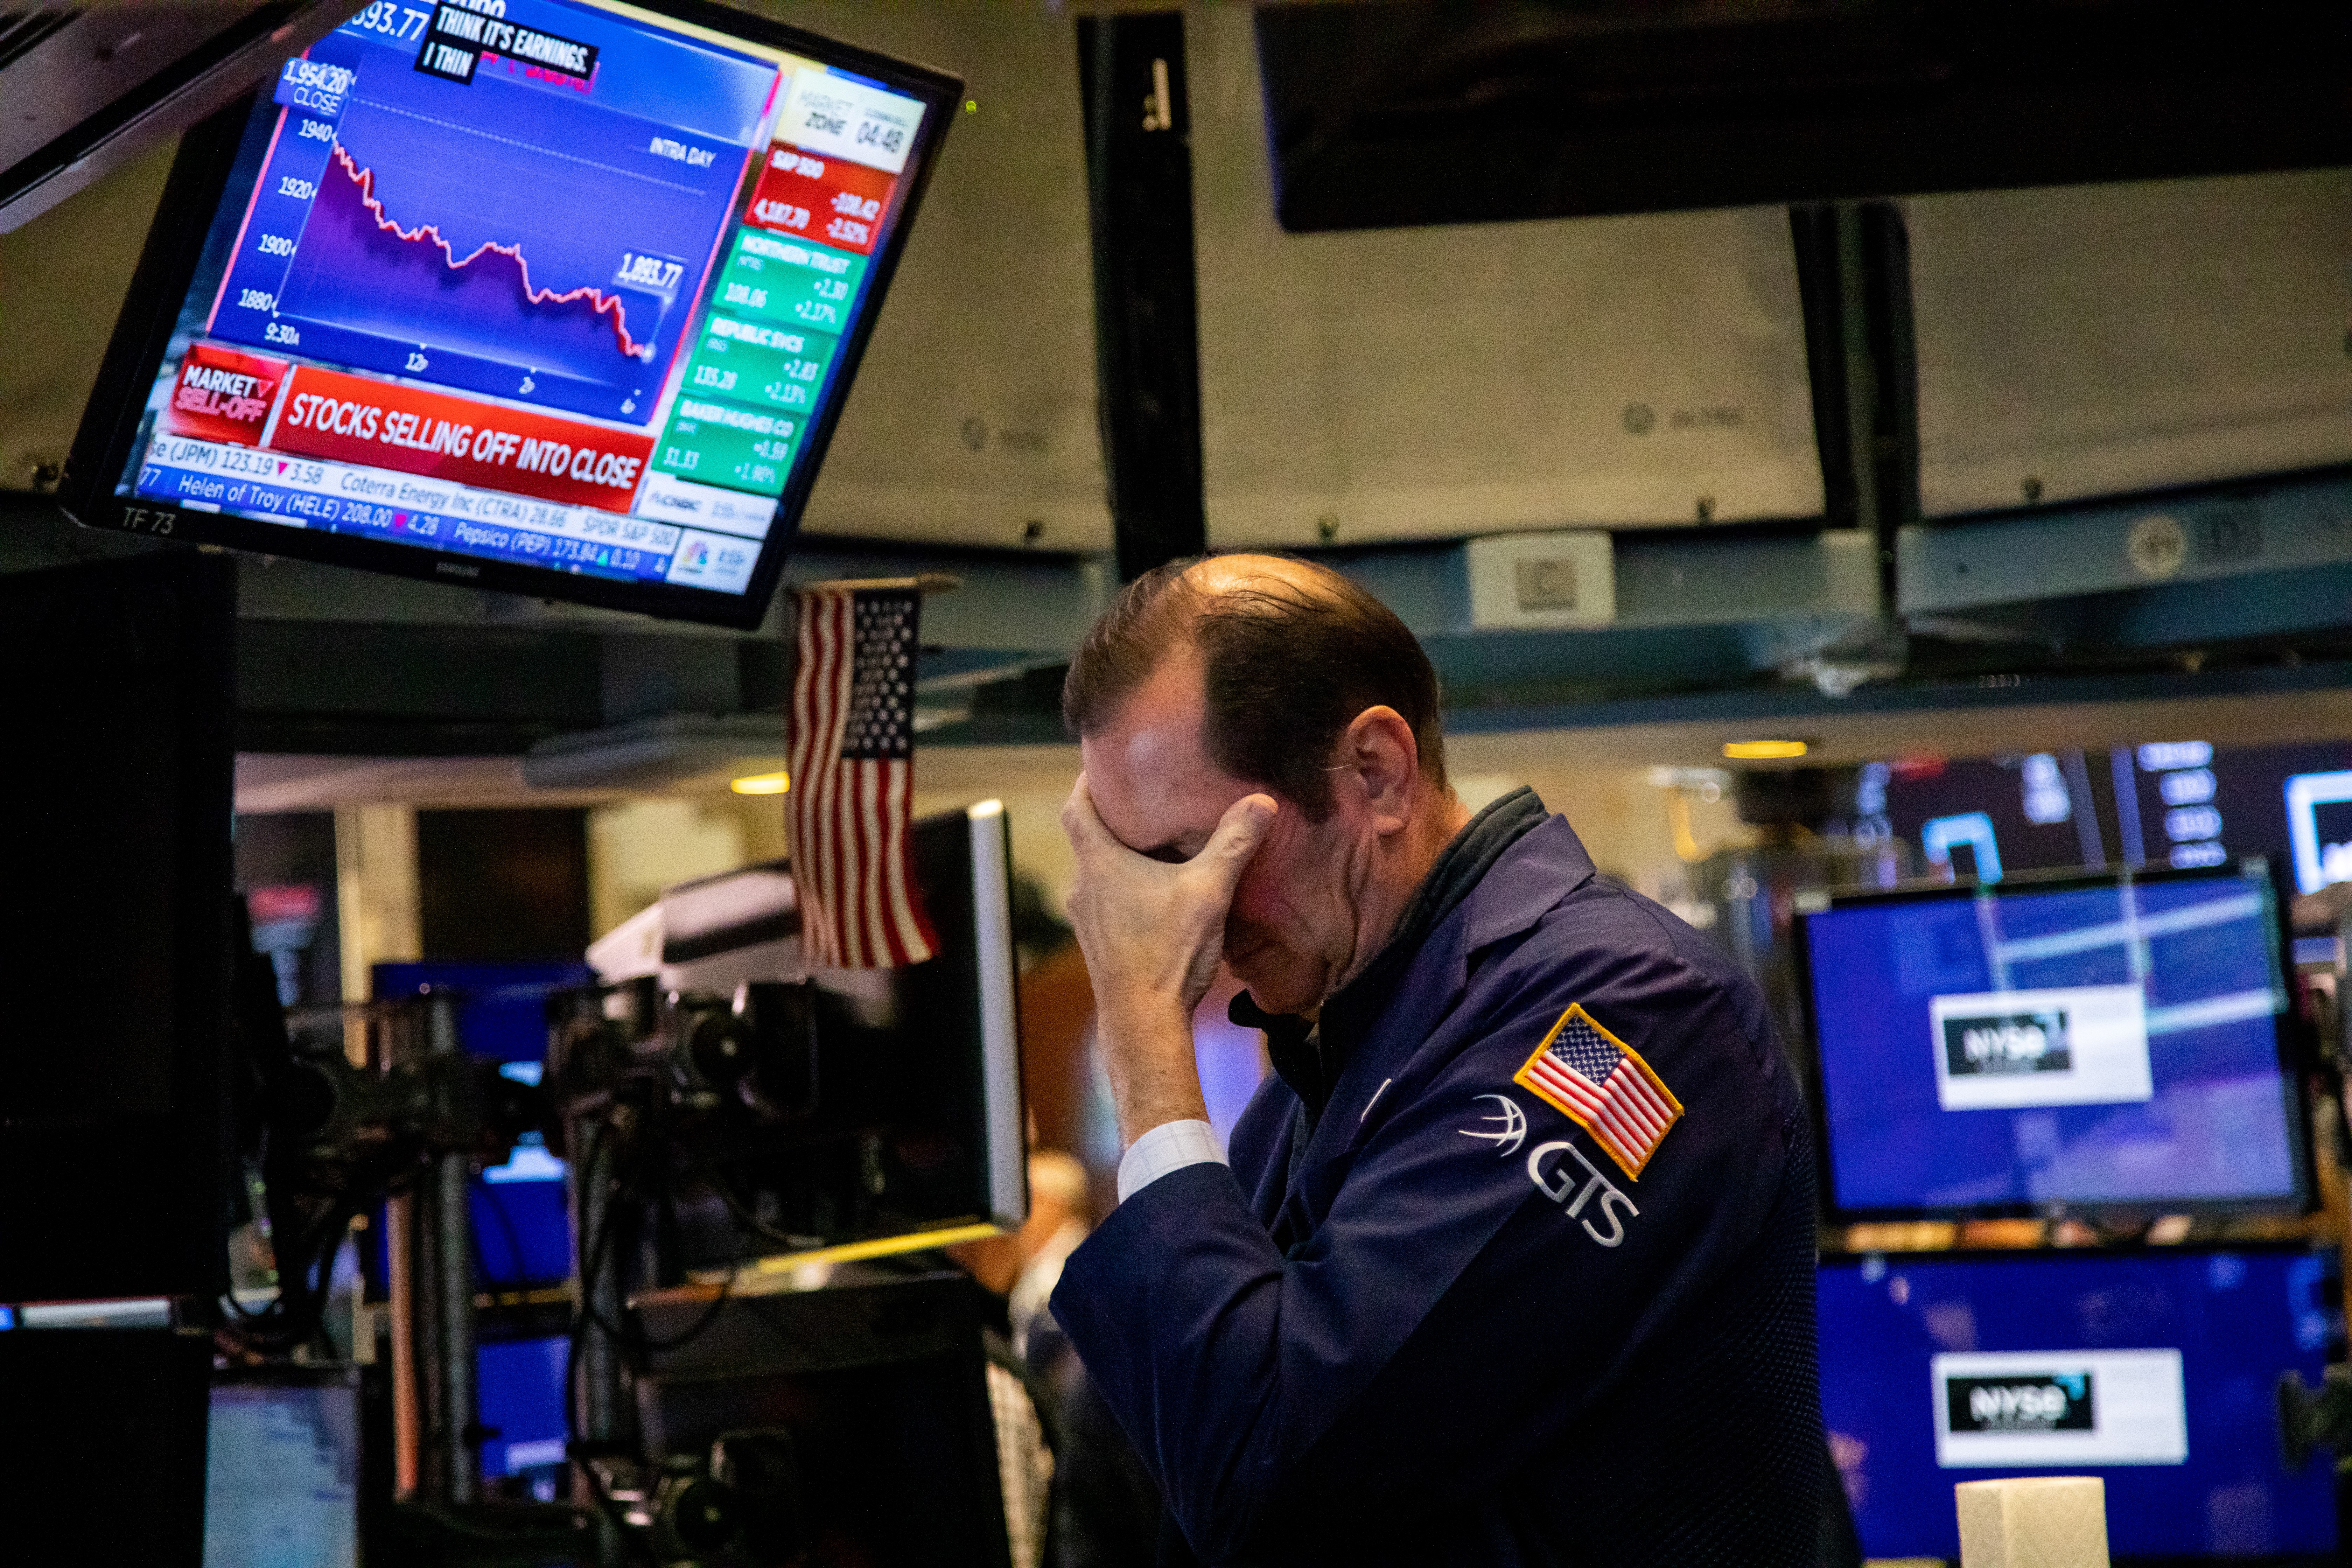 Stocks tank as Amazon endures worst day since 2006